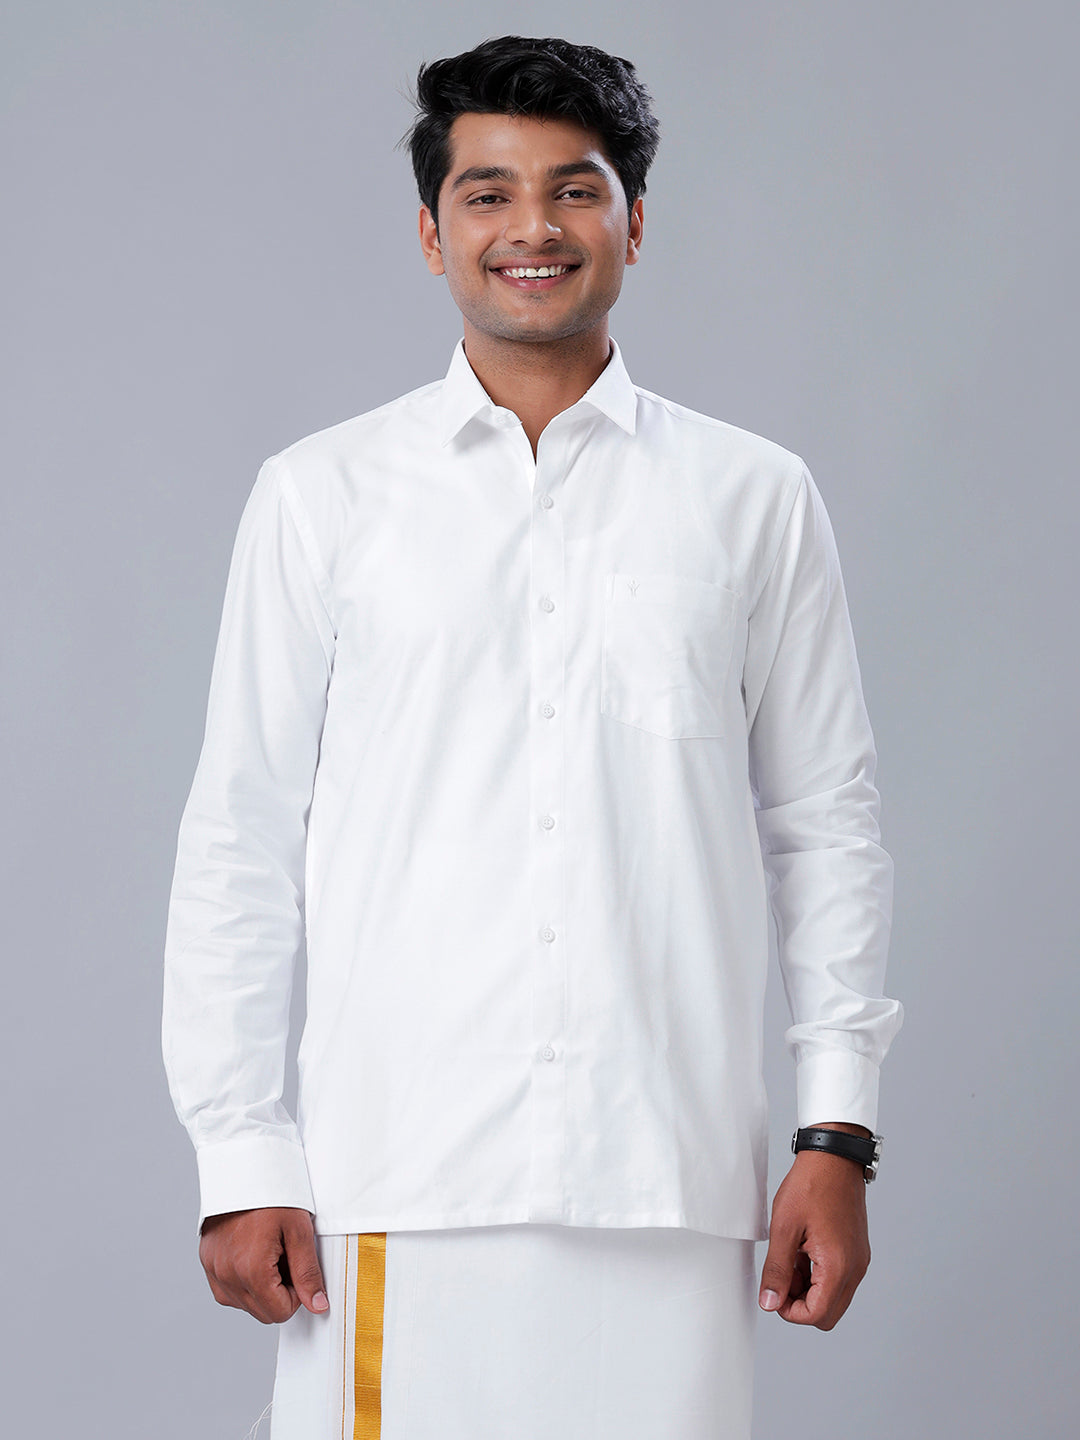 RAMRAJ COTTON Men Solid Cotton White Full Sleeve Shirt Super Soft Cotton